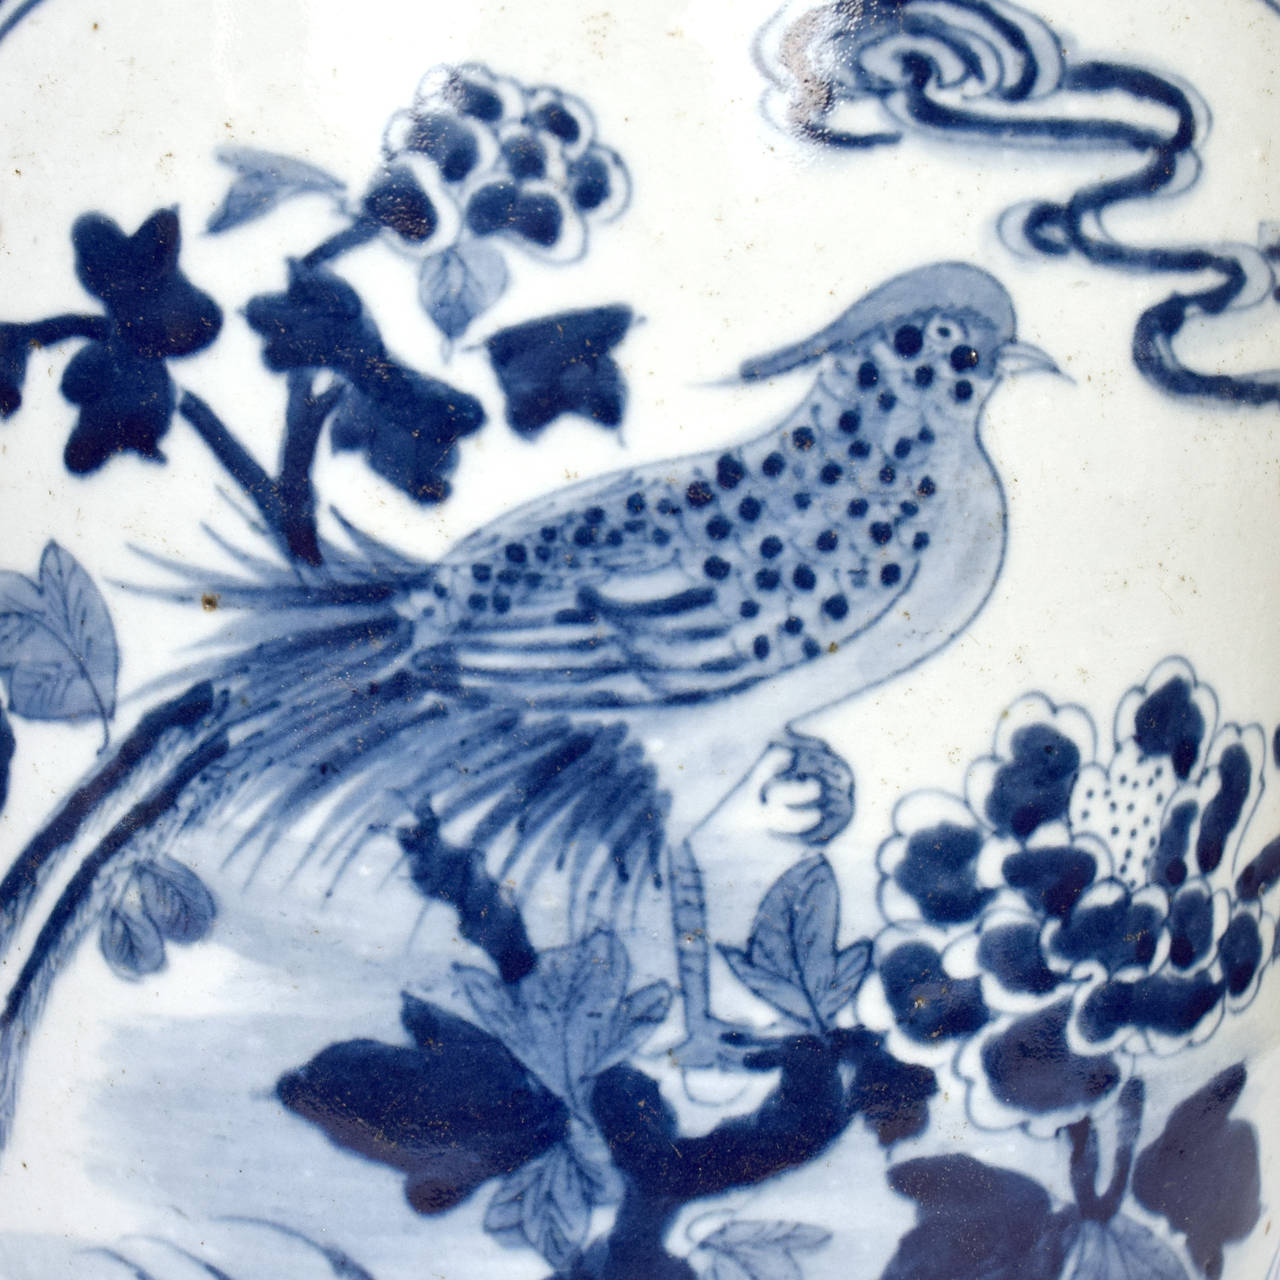 20th Century Vintage Chinese Indigo Tea Leaf Jar with Birds and Botanicals